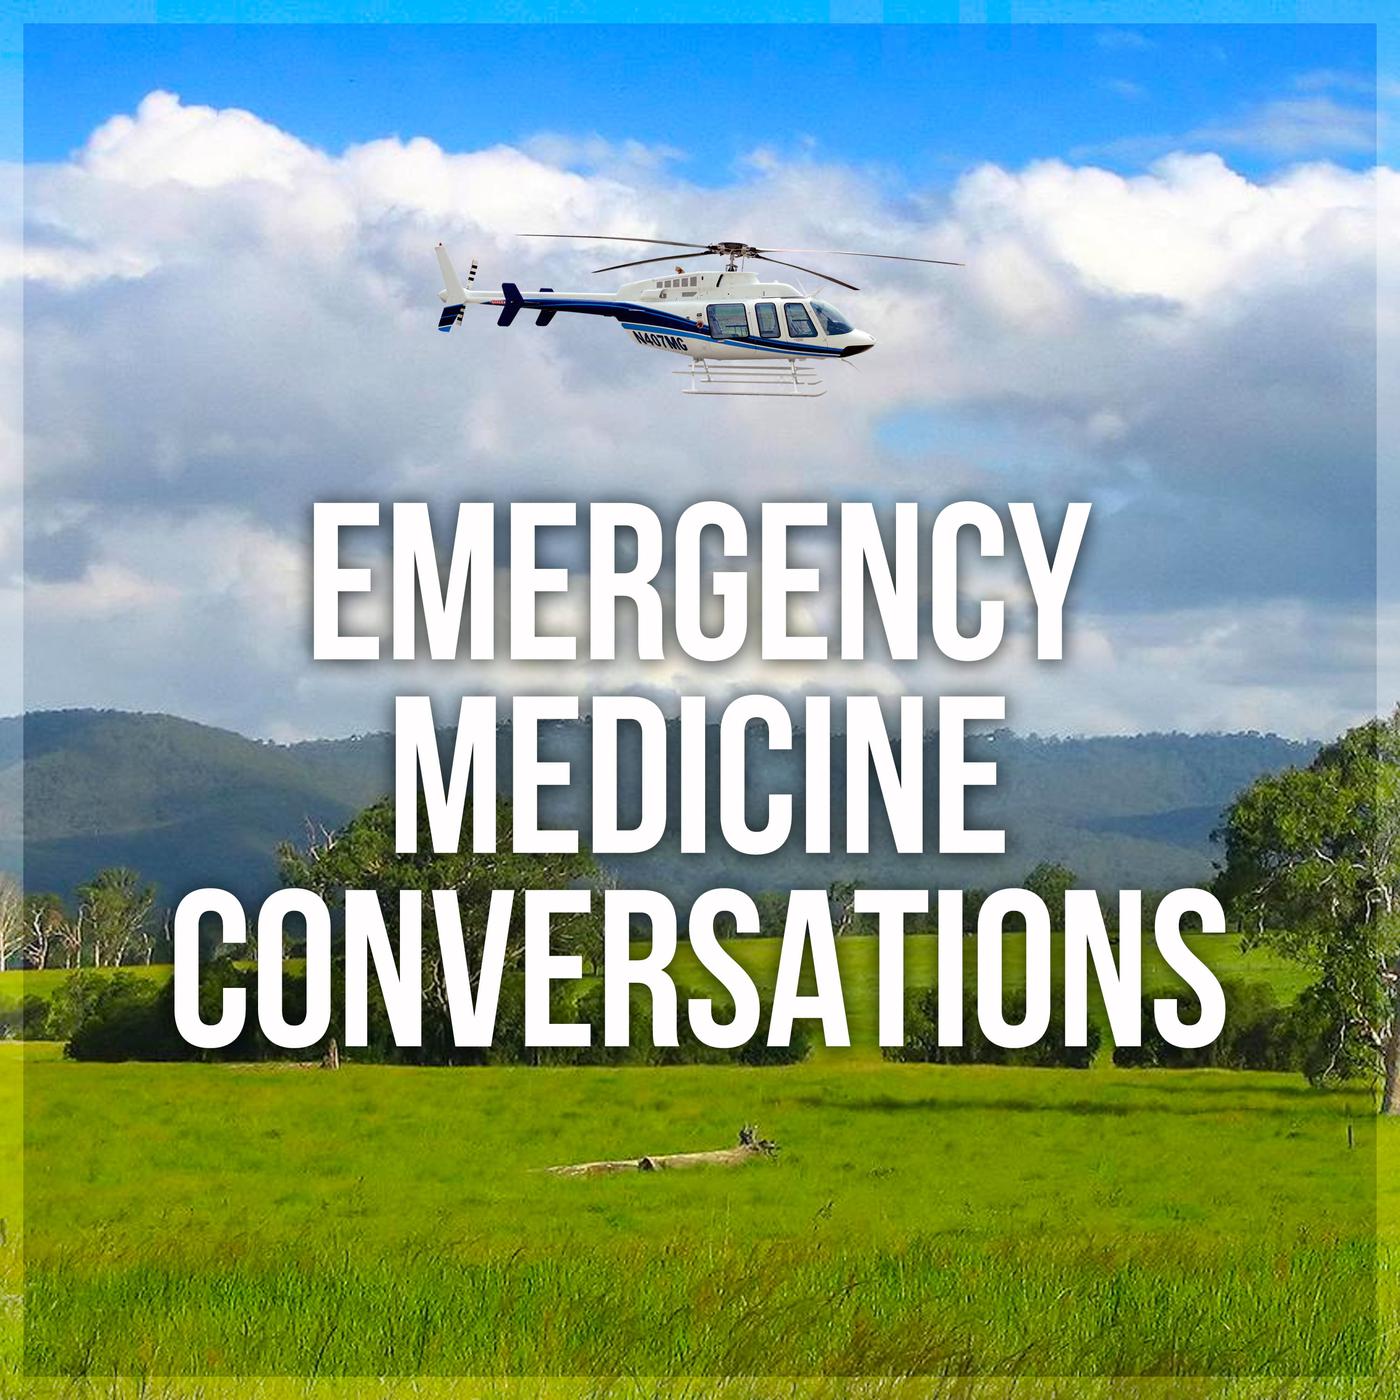 Emergency Medicine Conversations logo